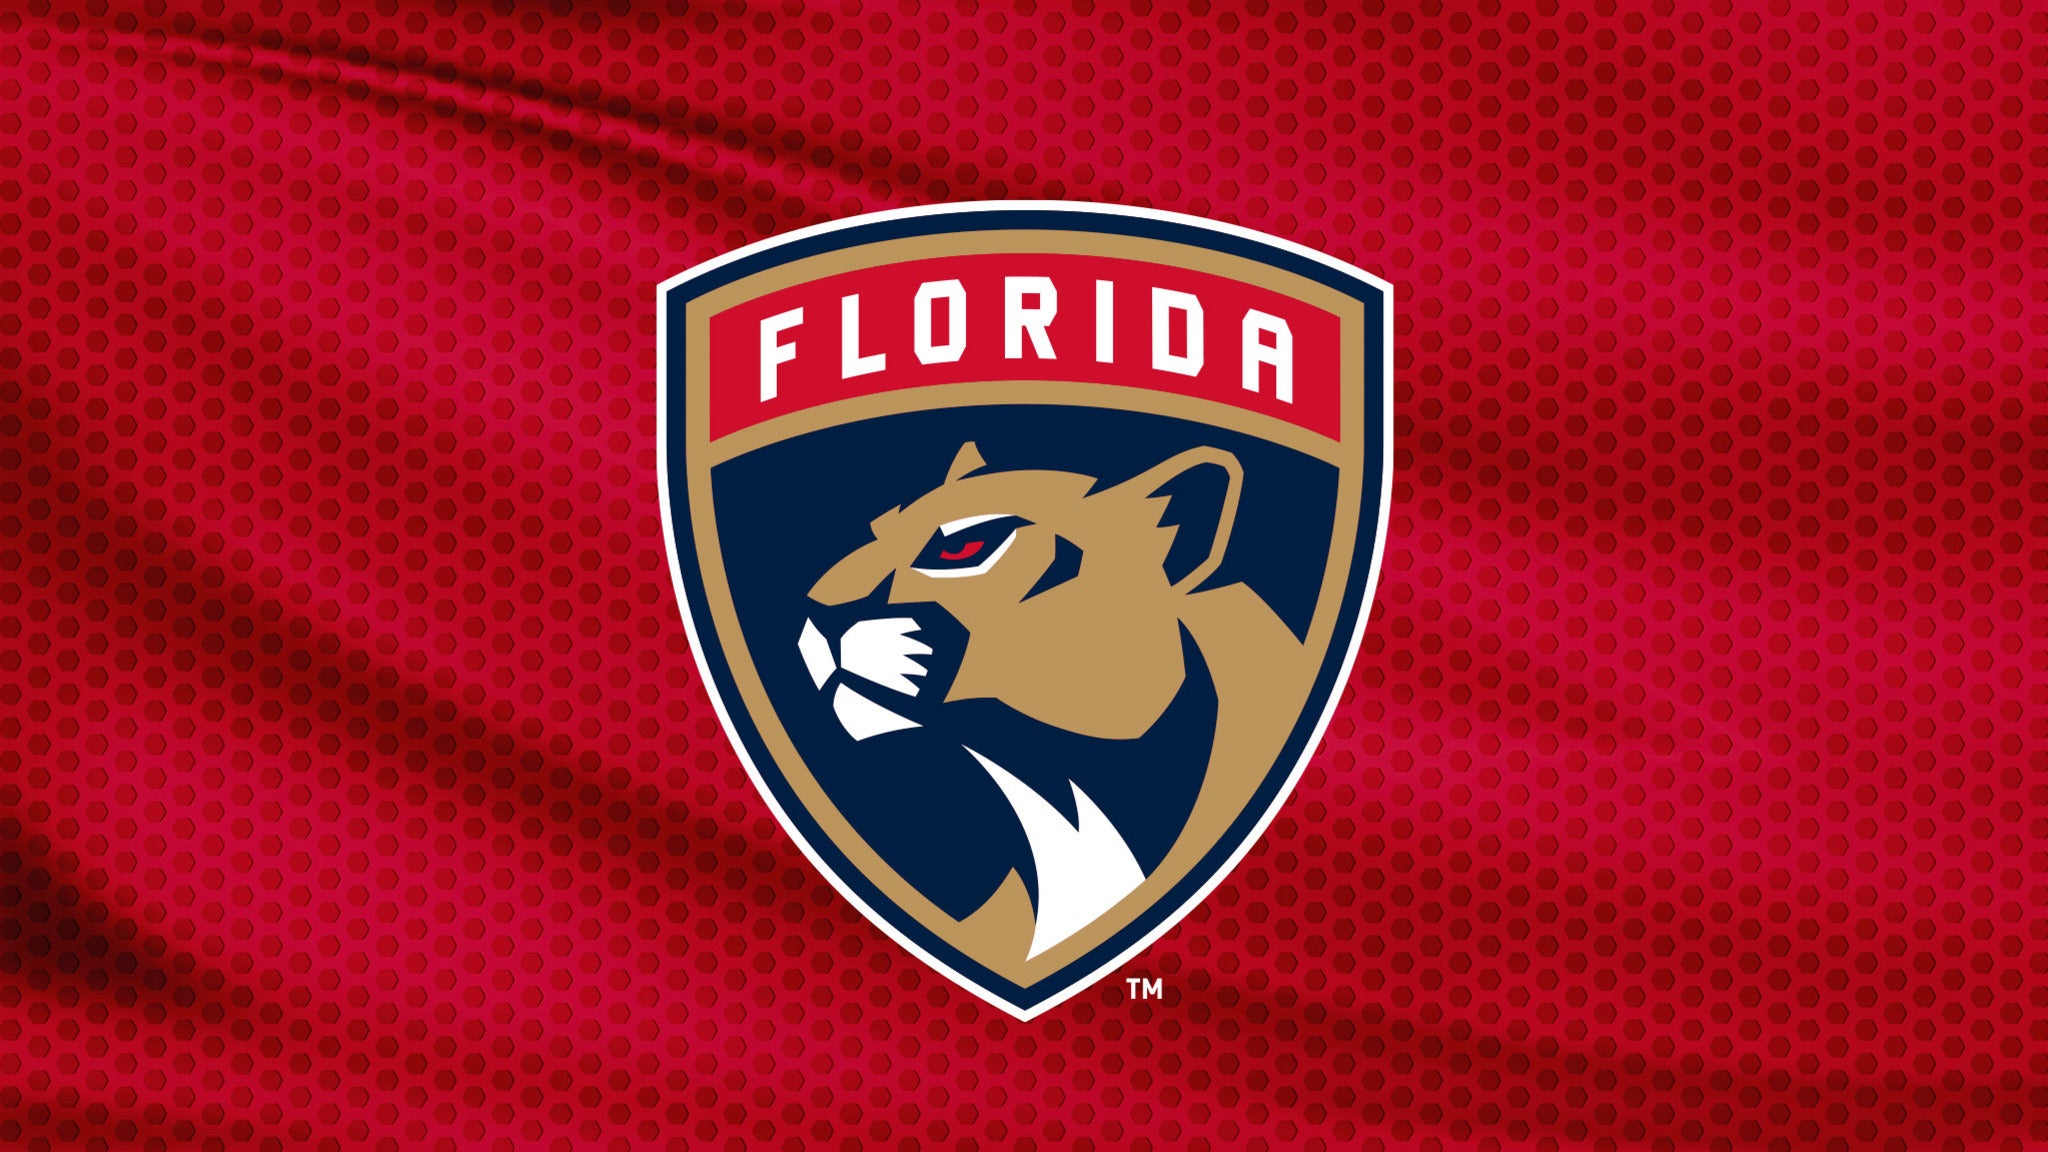 Florida Panthers vs. New Jersey Devils at FLA Live Arena - Sunrise, FL 33323